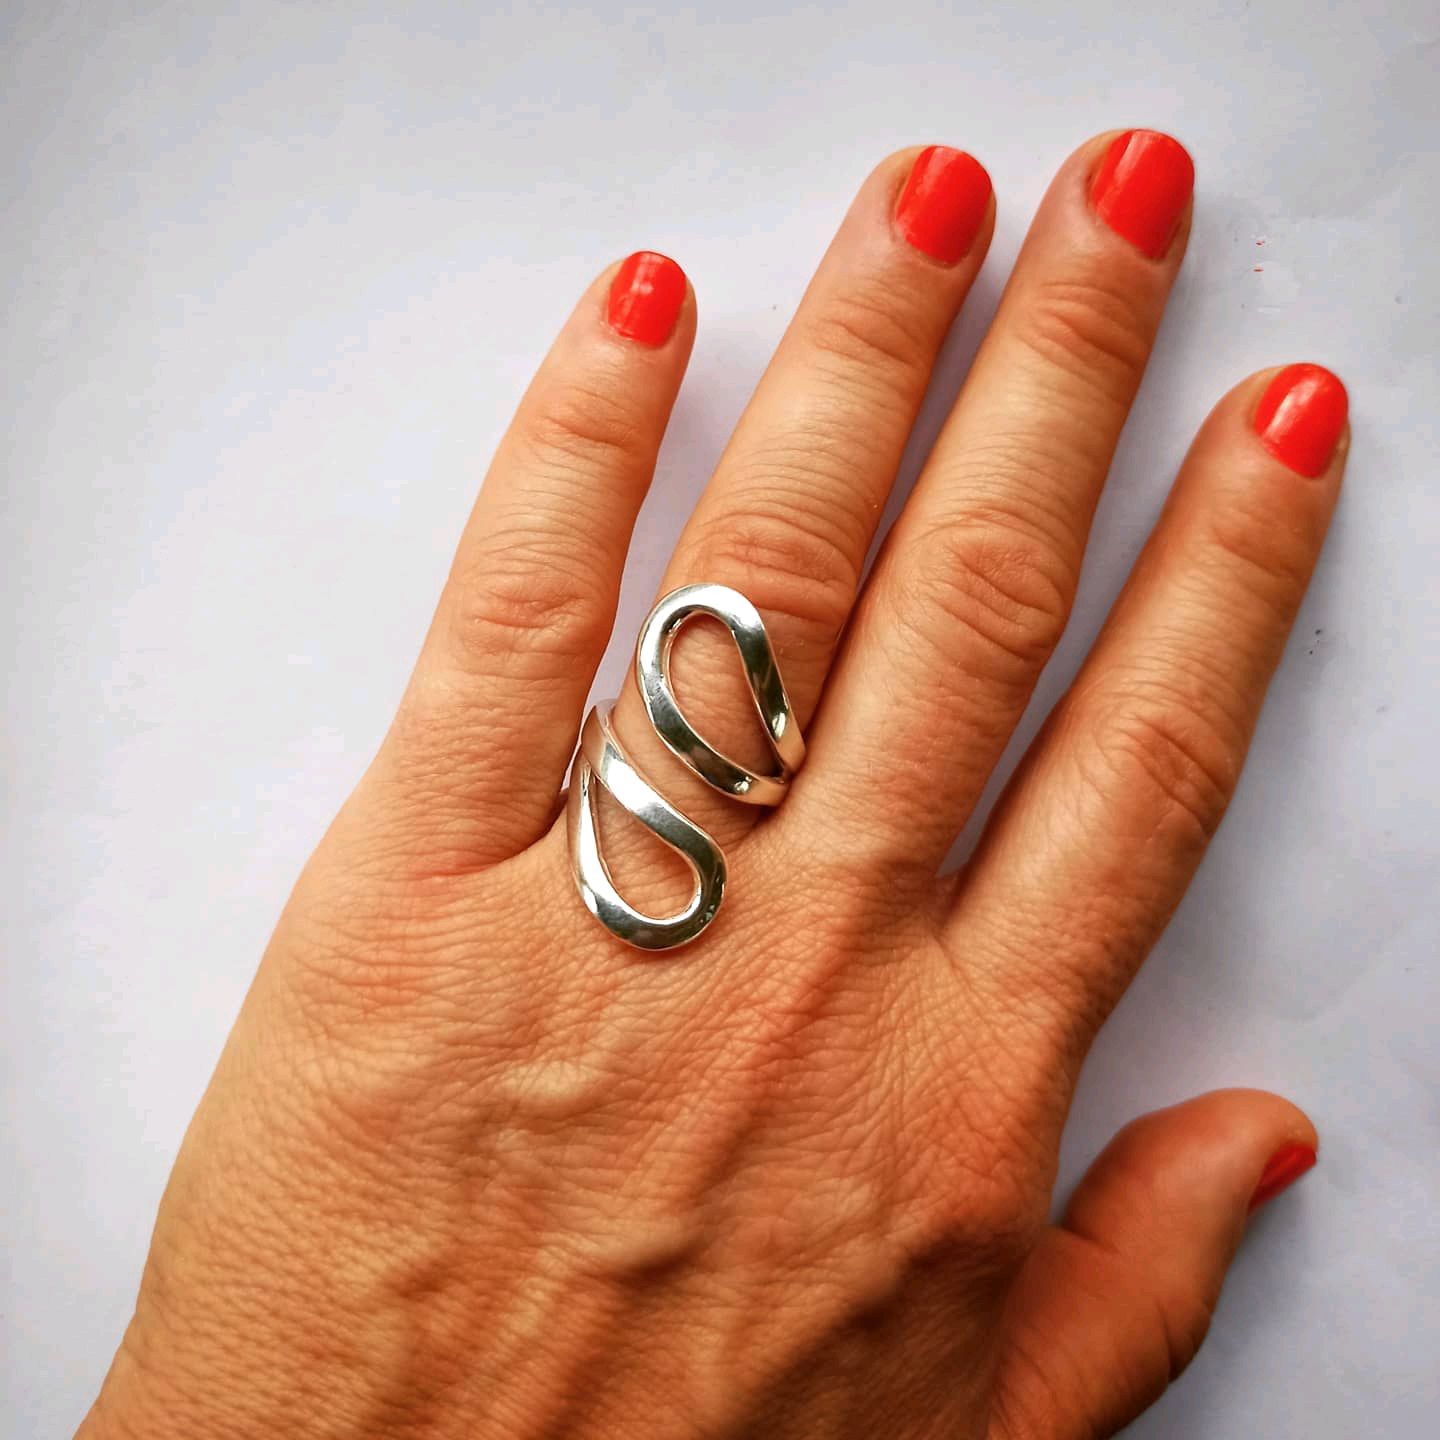 Оригинальное кольцо на палец